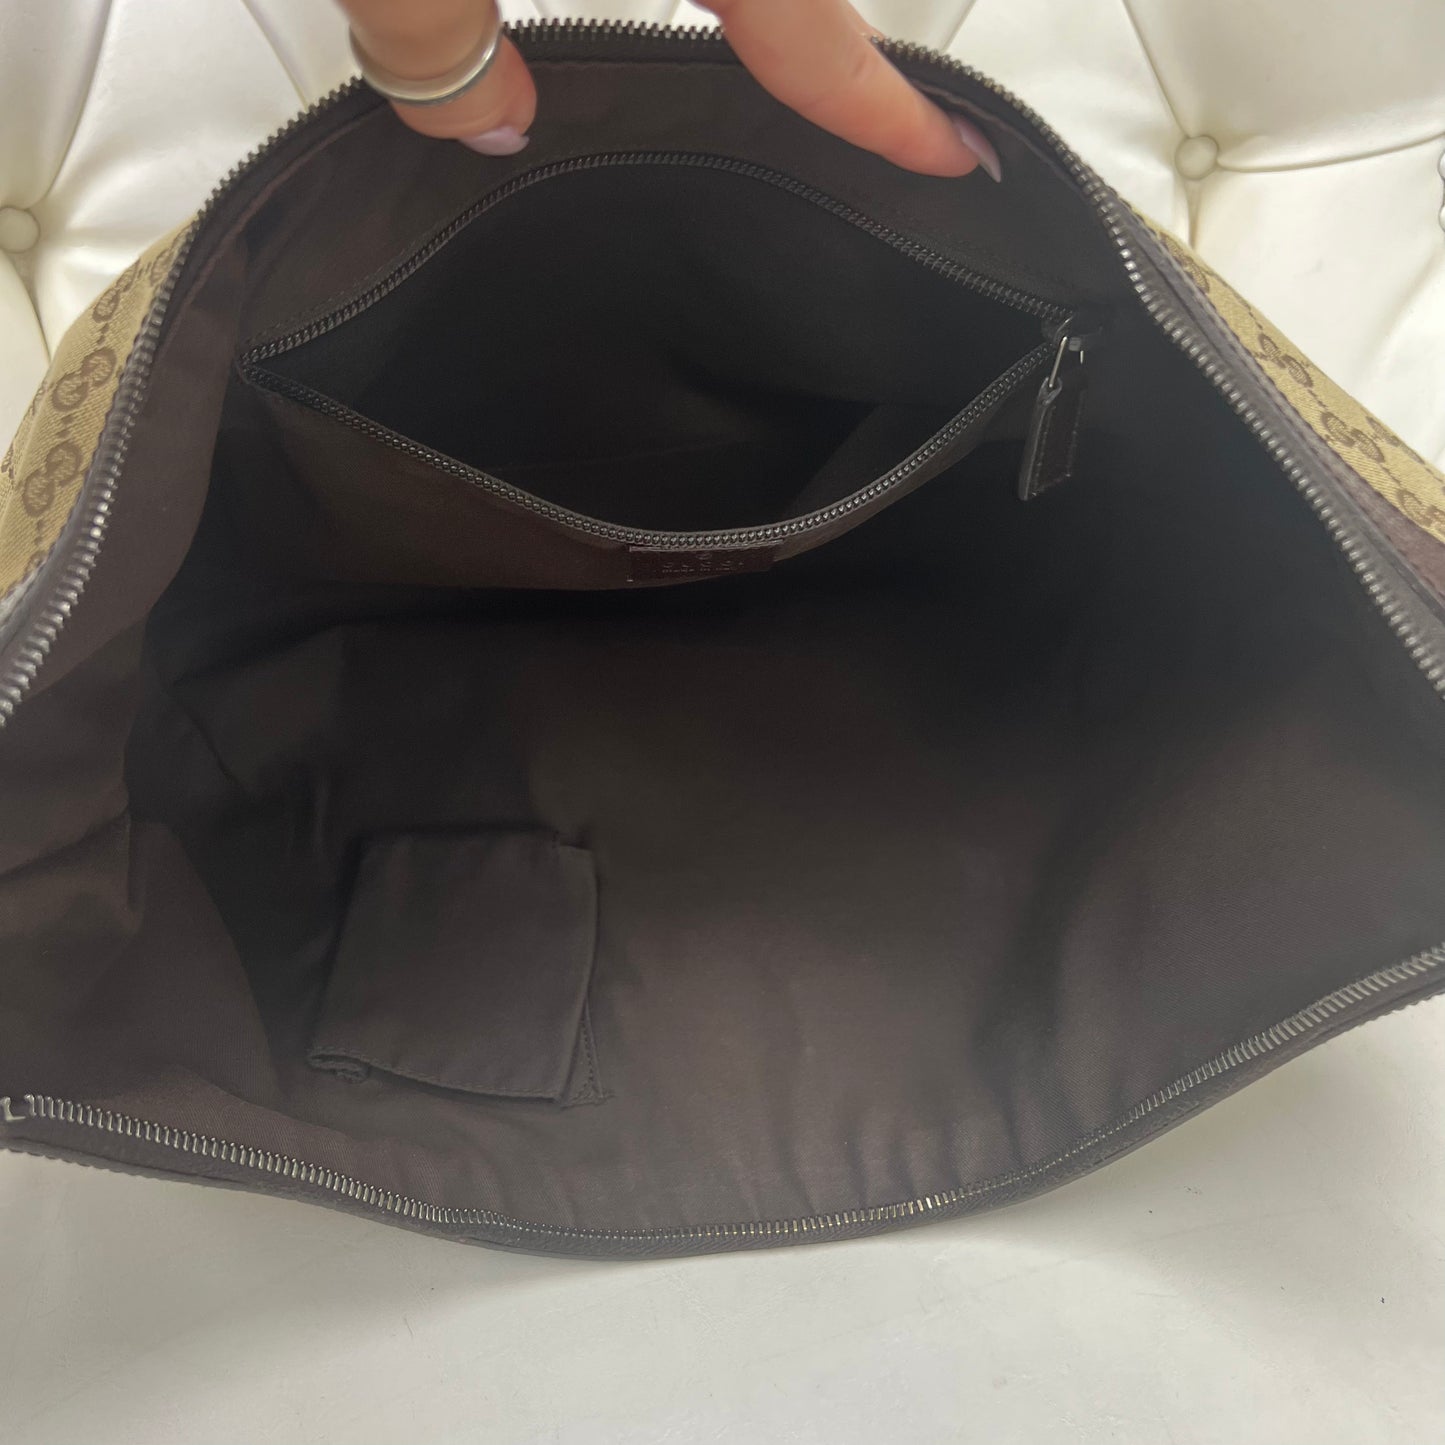 Gucci Half Moon Shoulder Bag Large